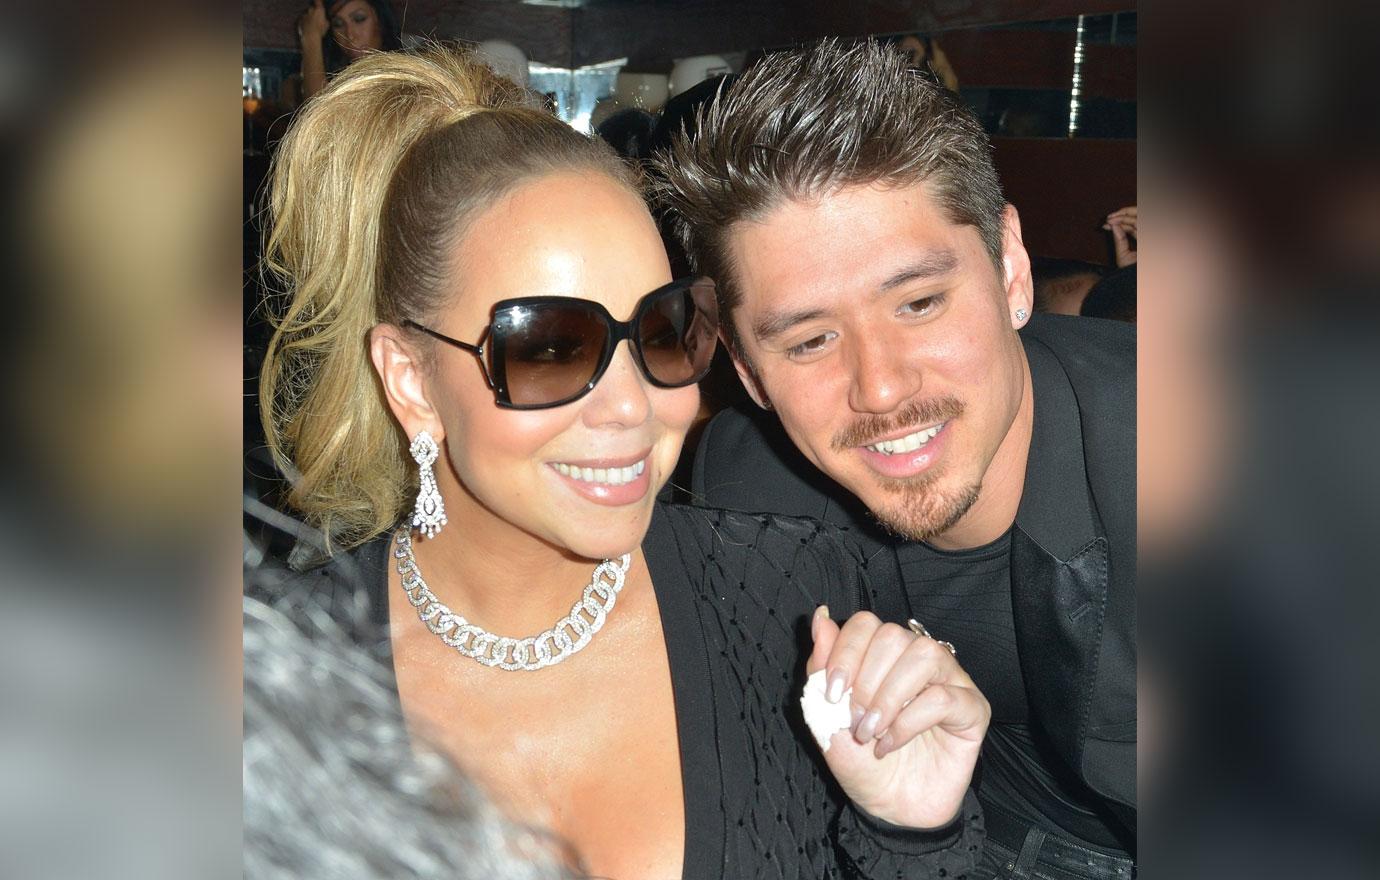 Mariah Carey Rocked Sunglasses Inside at Floyd Mayweather's Birthday